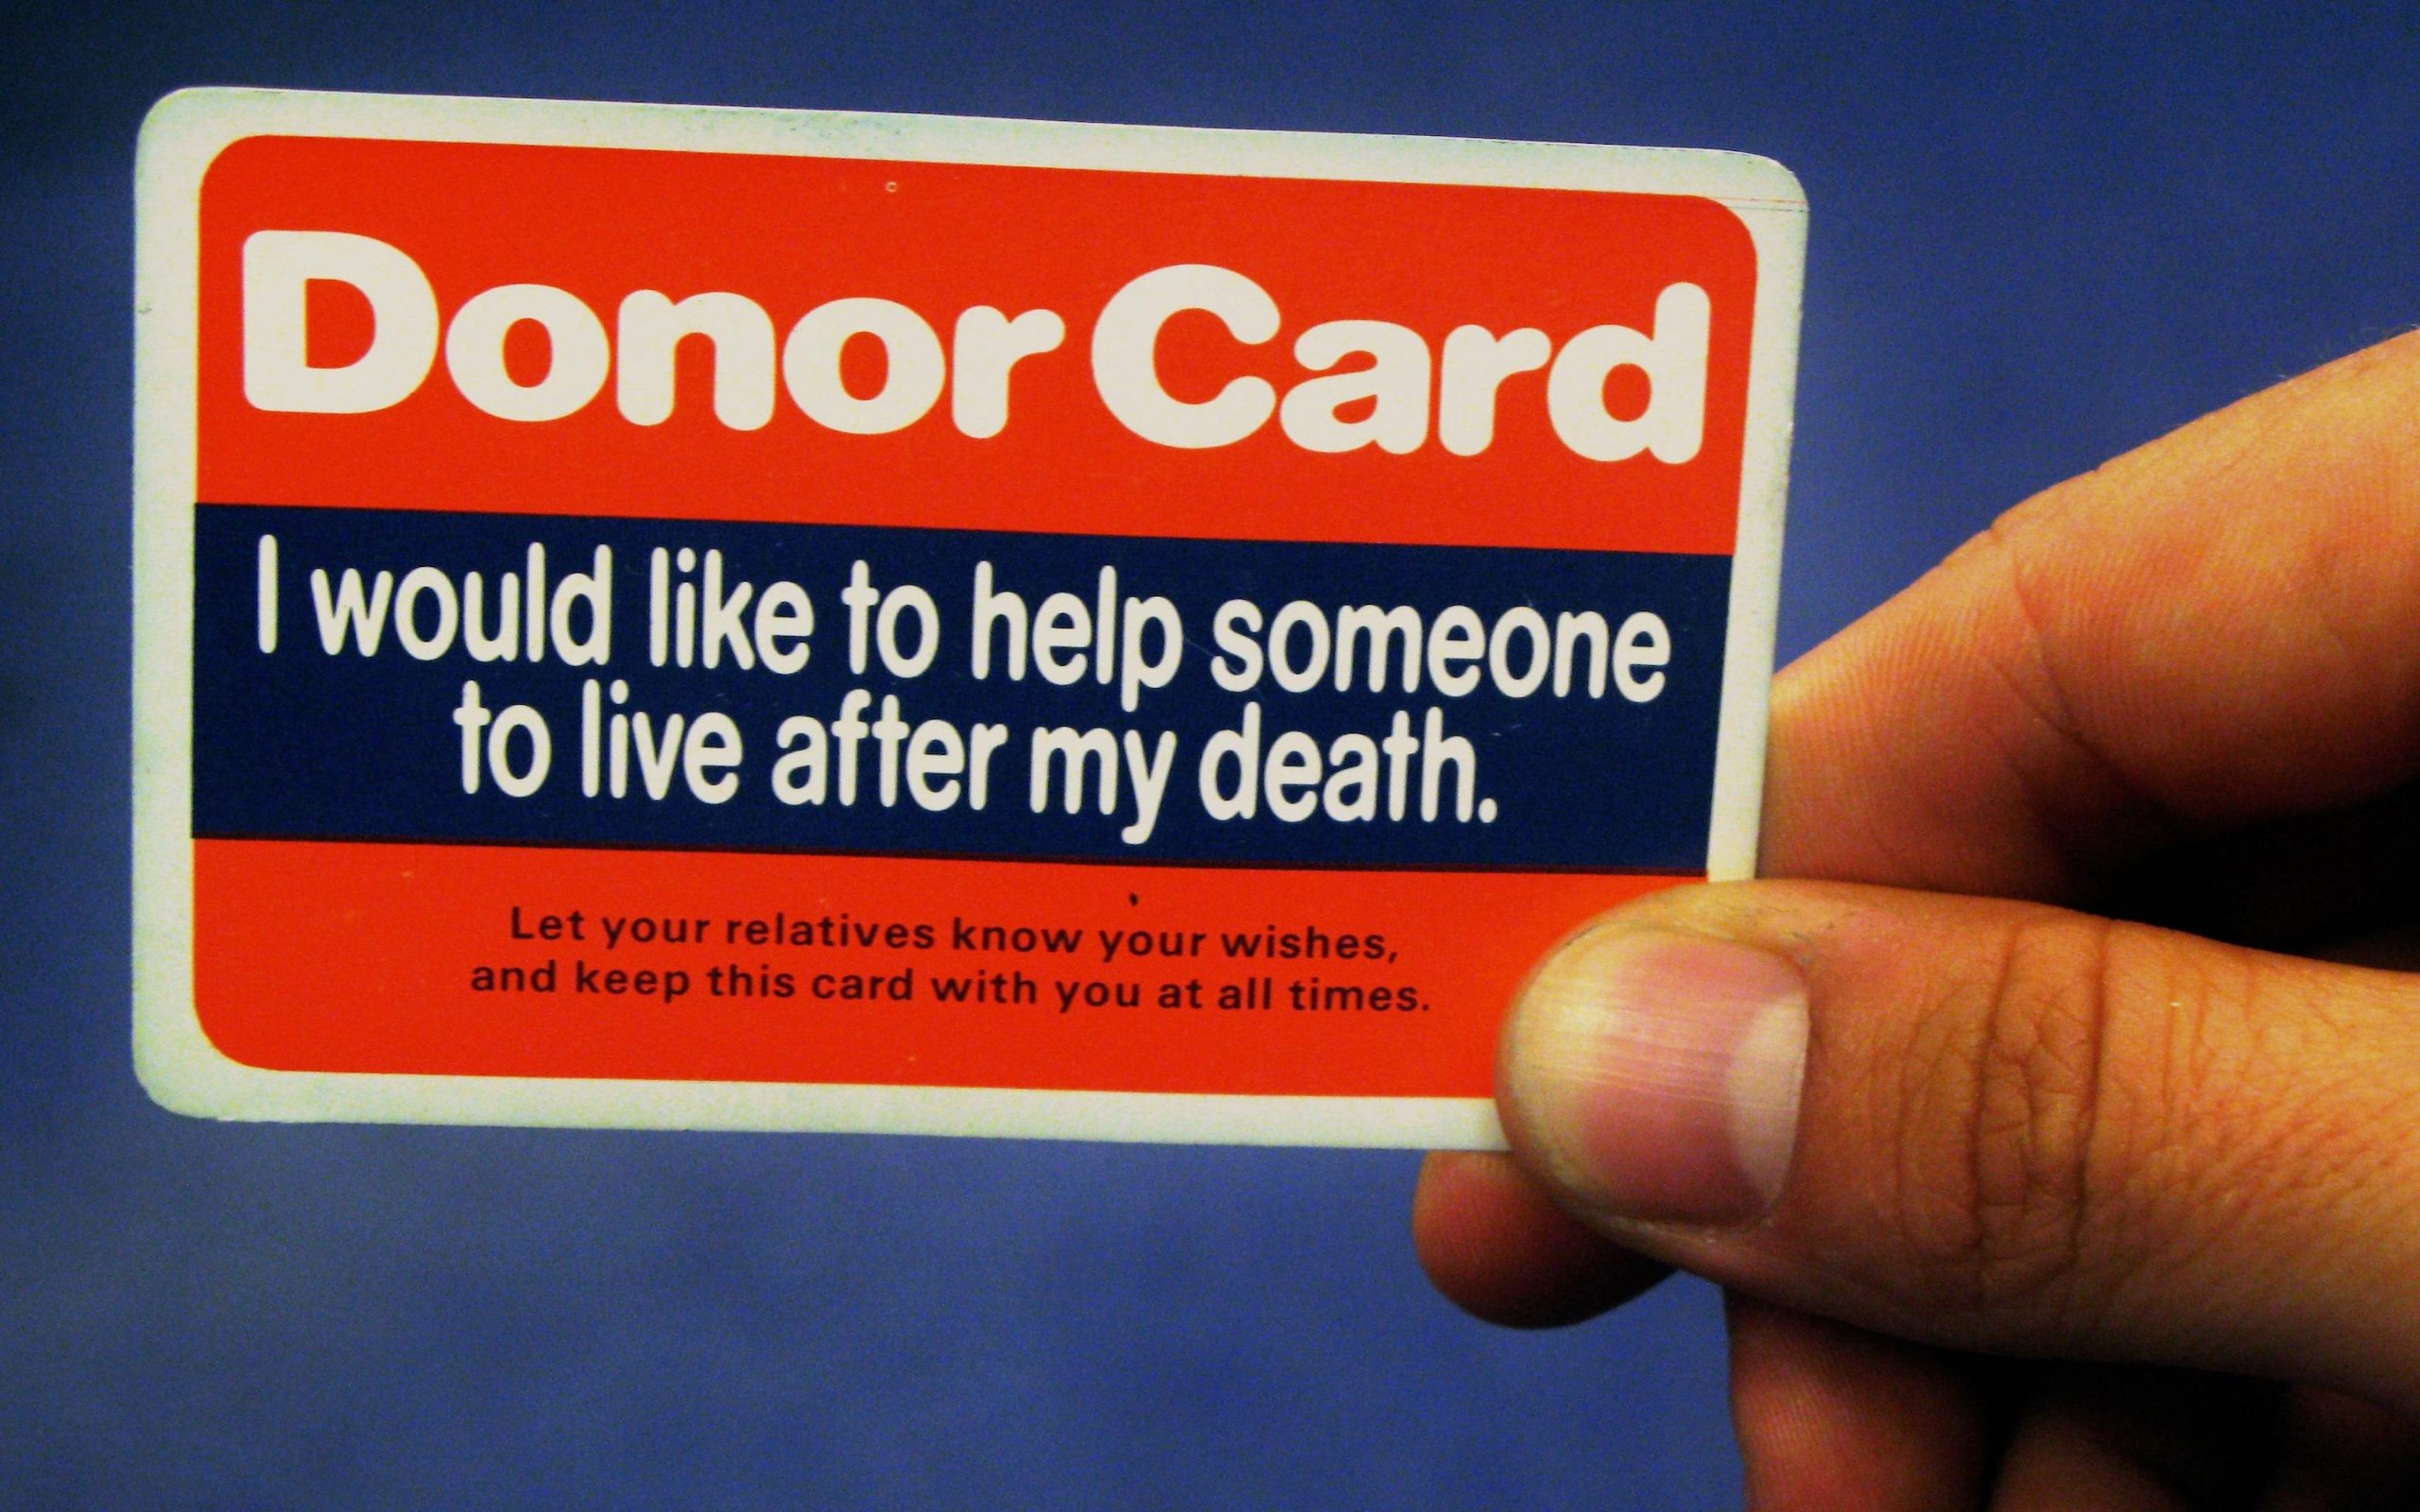 Old organ donation card